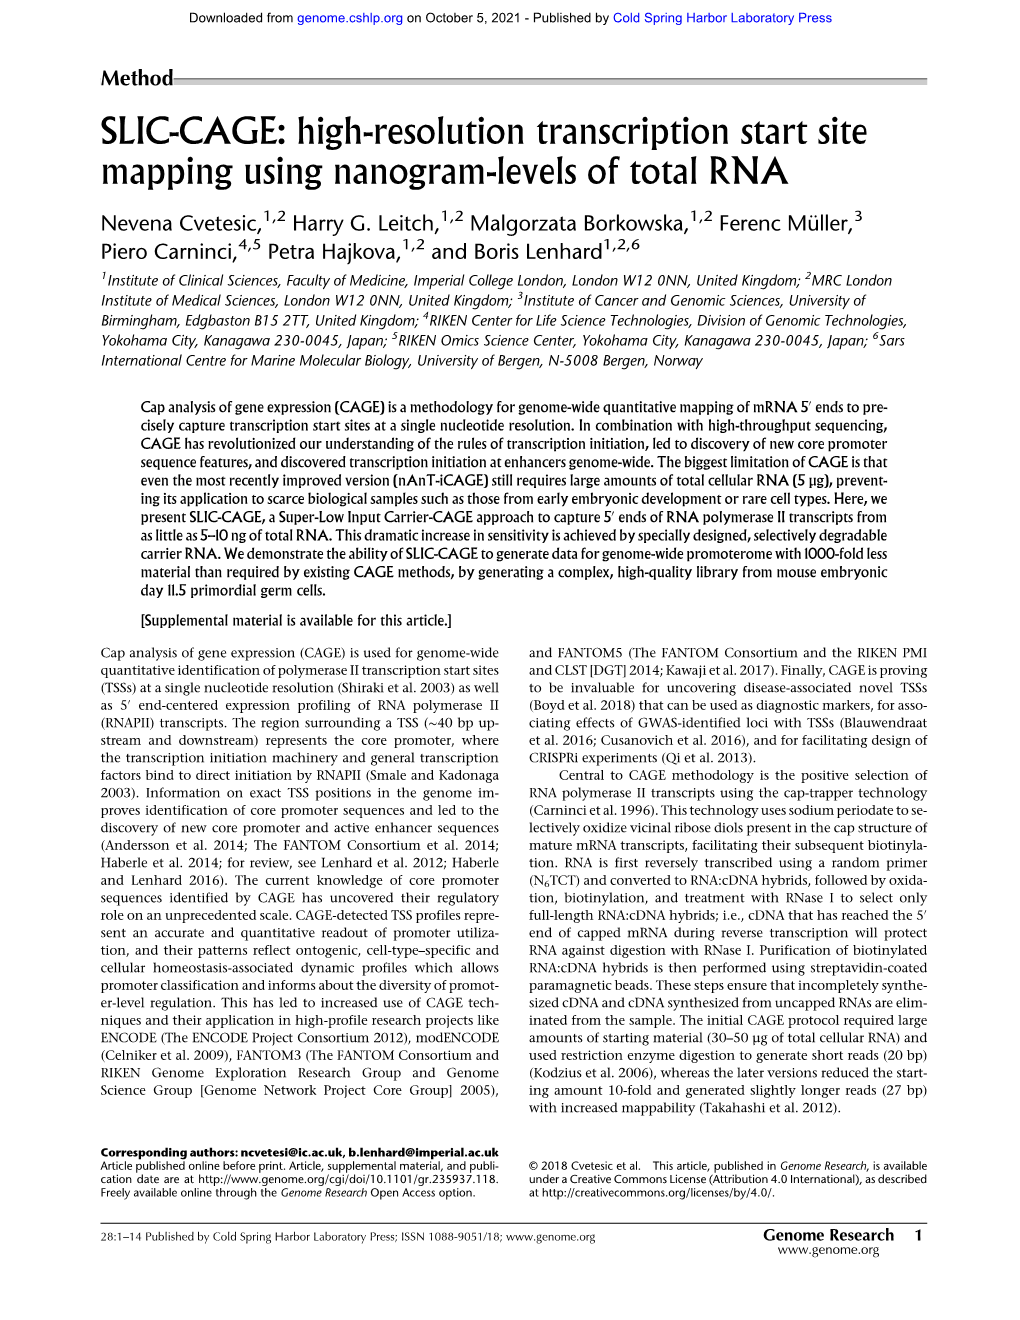 SLIC-CAGE: High-Resolution Transcription Start Site Mapping Using Nanogram-Levels of Total RNA